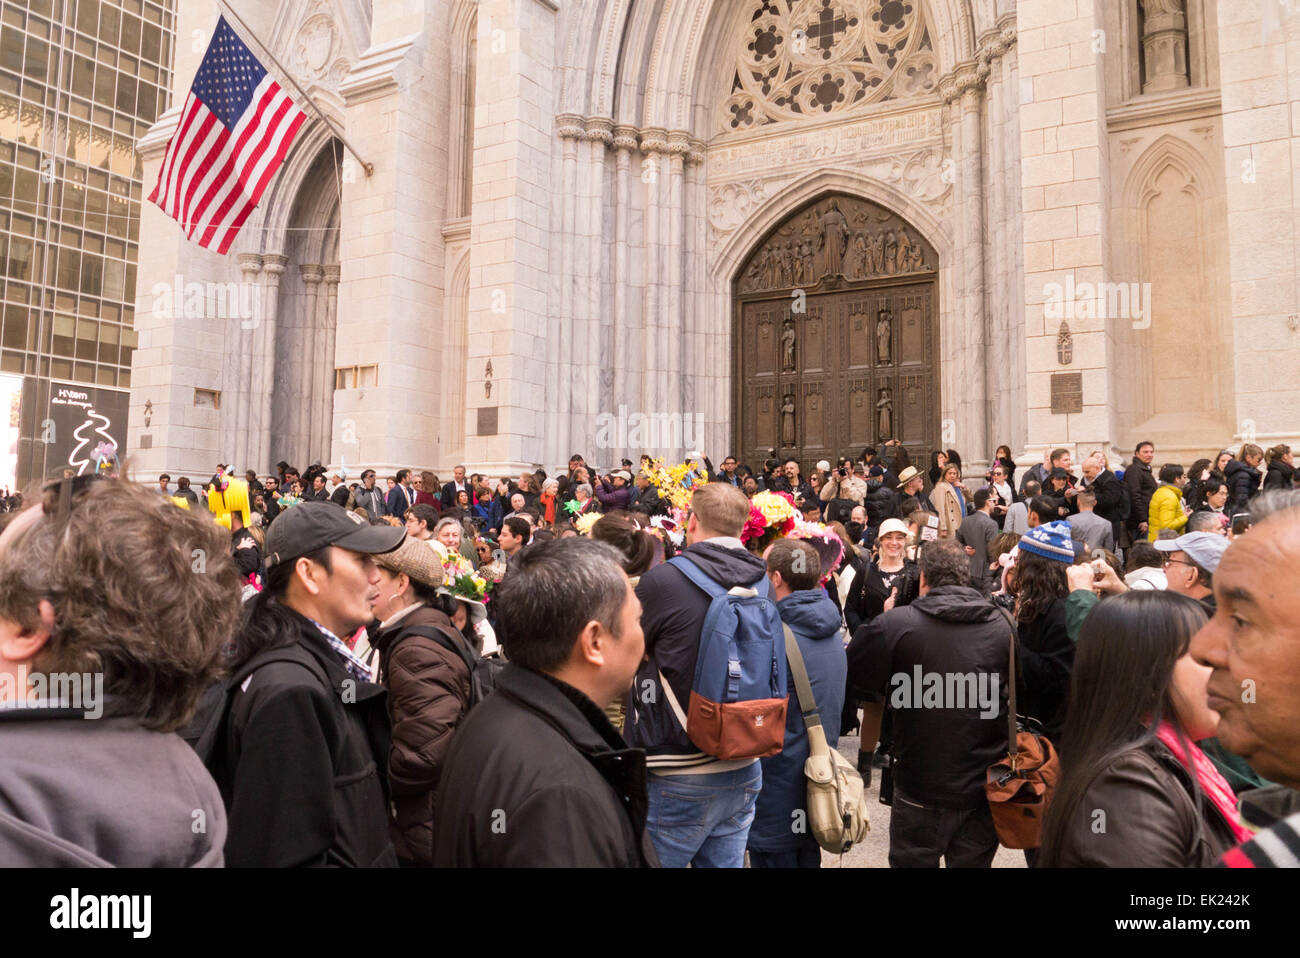 New York, USA. 5. April 2015. Menschen versammeln sich vor St. Patricks Kathedrale während der 2015 Easter Parade Kredit: Donald Bowers/Alamy Live News Stockfoto